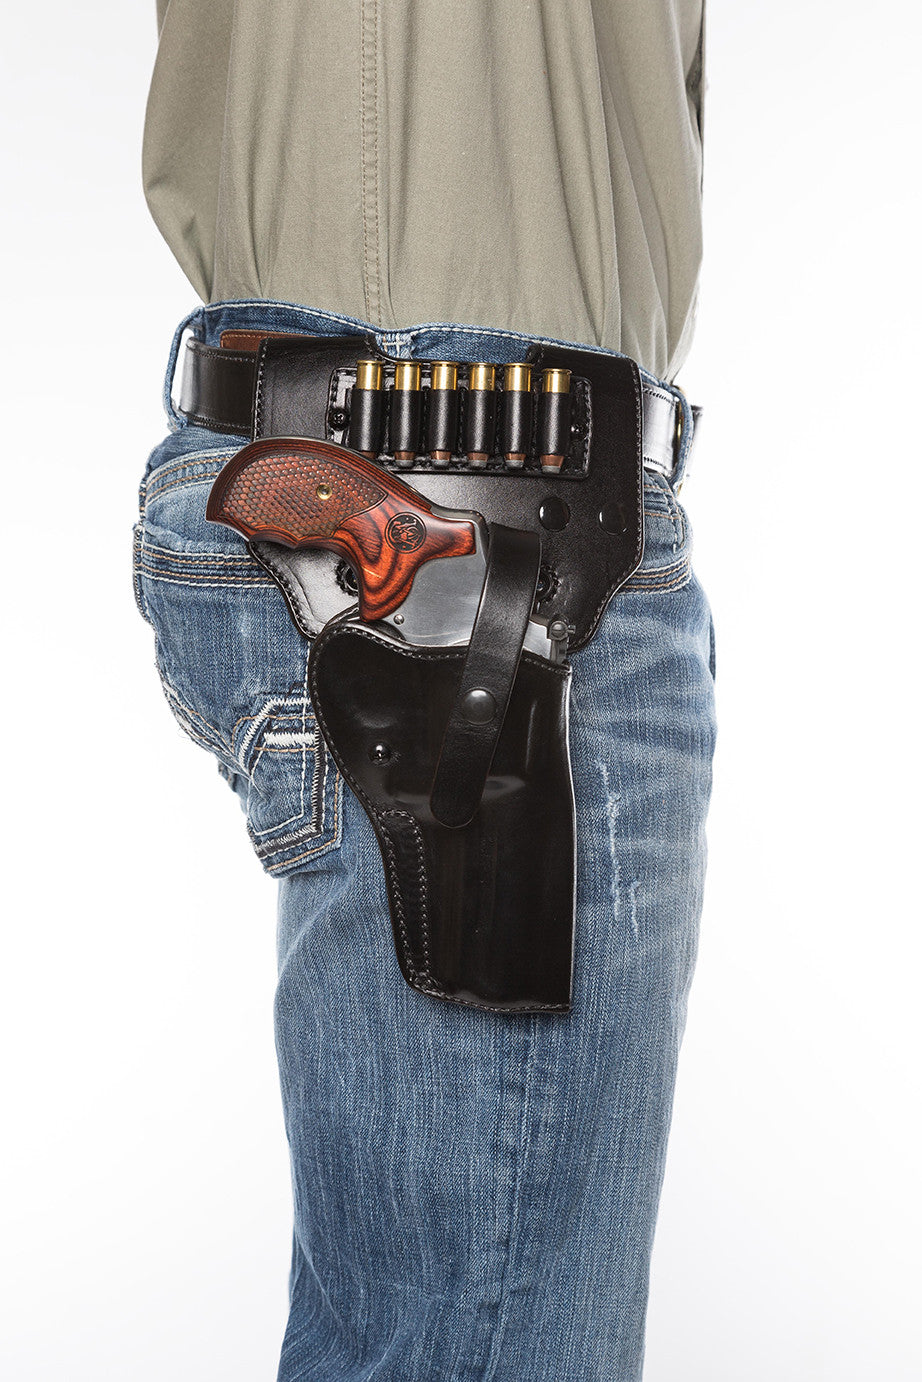 Alaska Hunter Hip Holster, a leather gun holster designed to work, Diamond  D Custom Leather, leather drop leg holster 